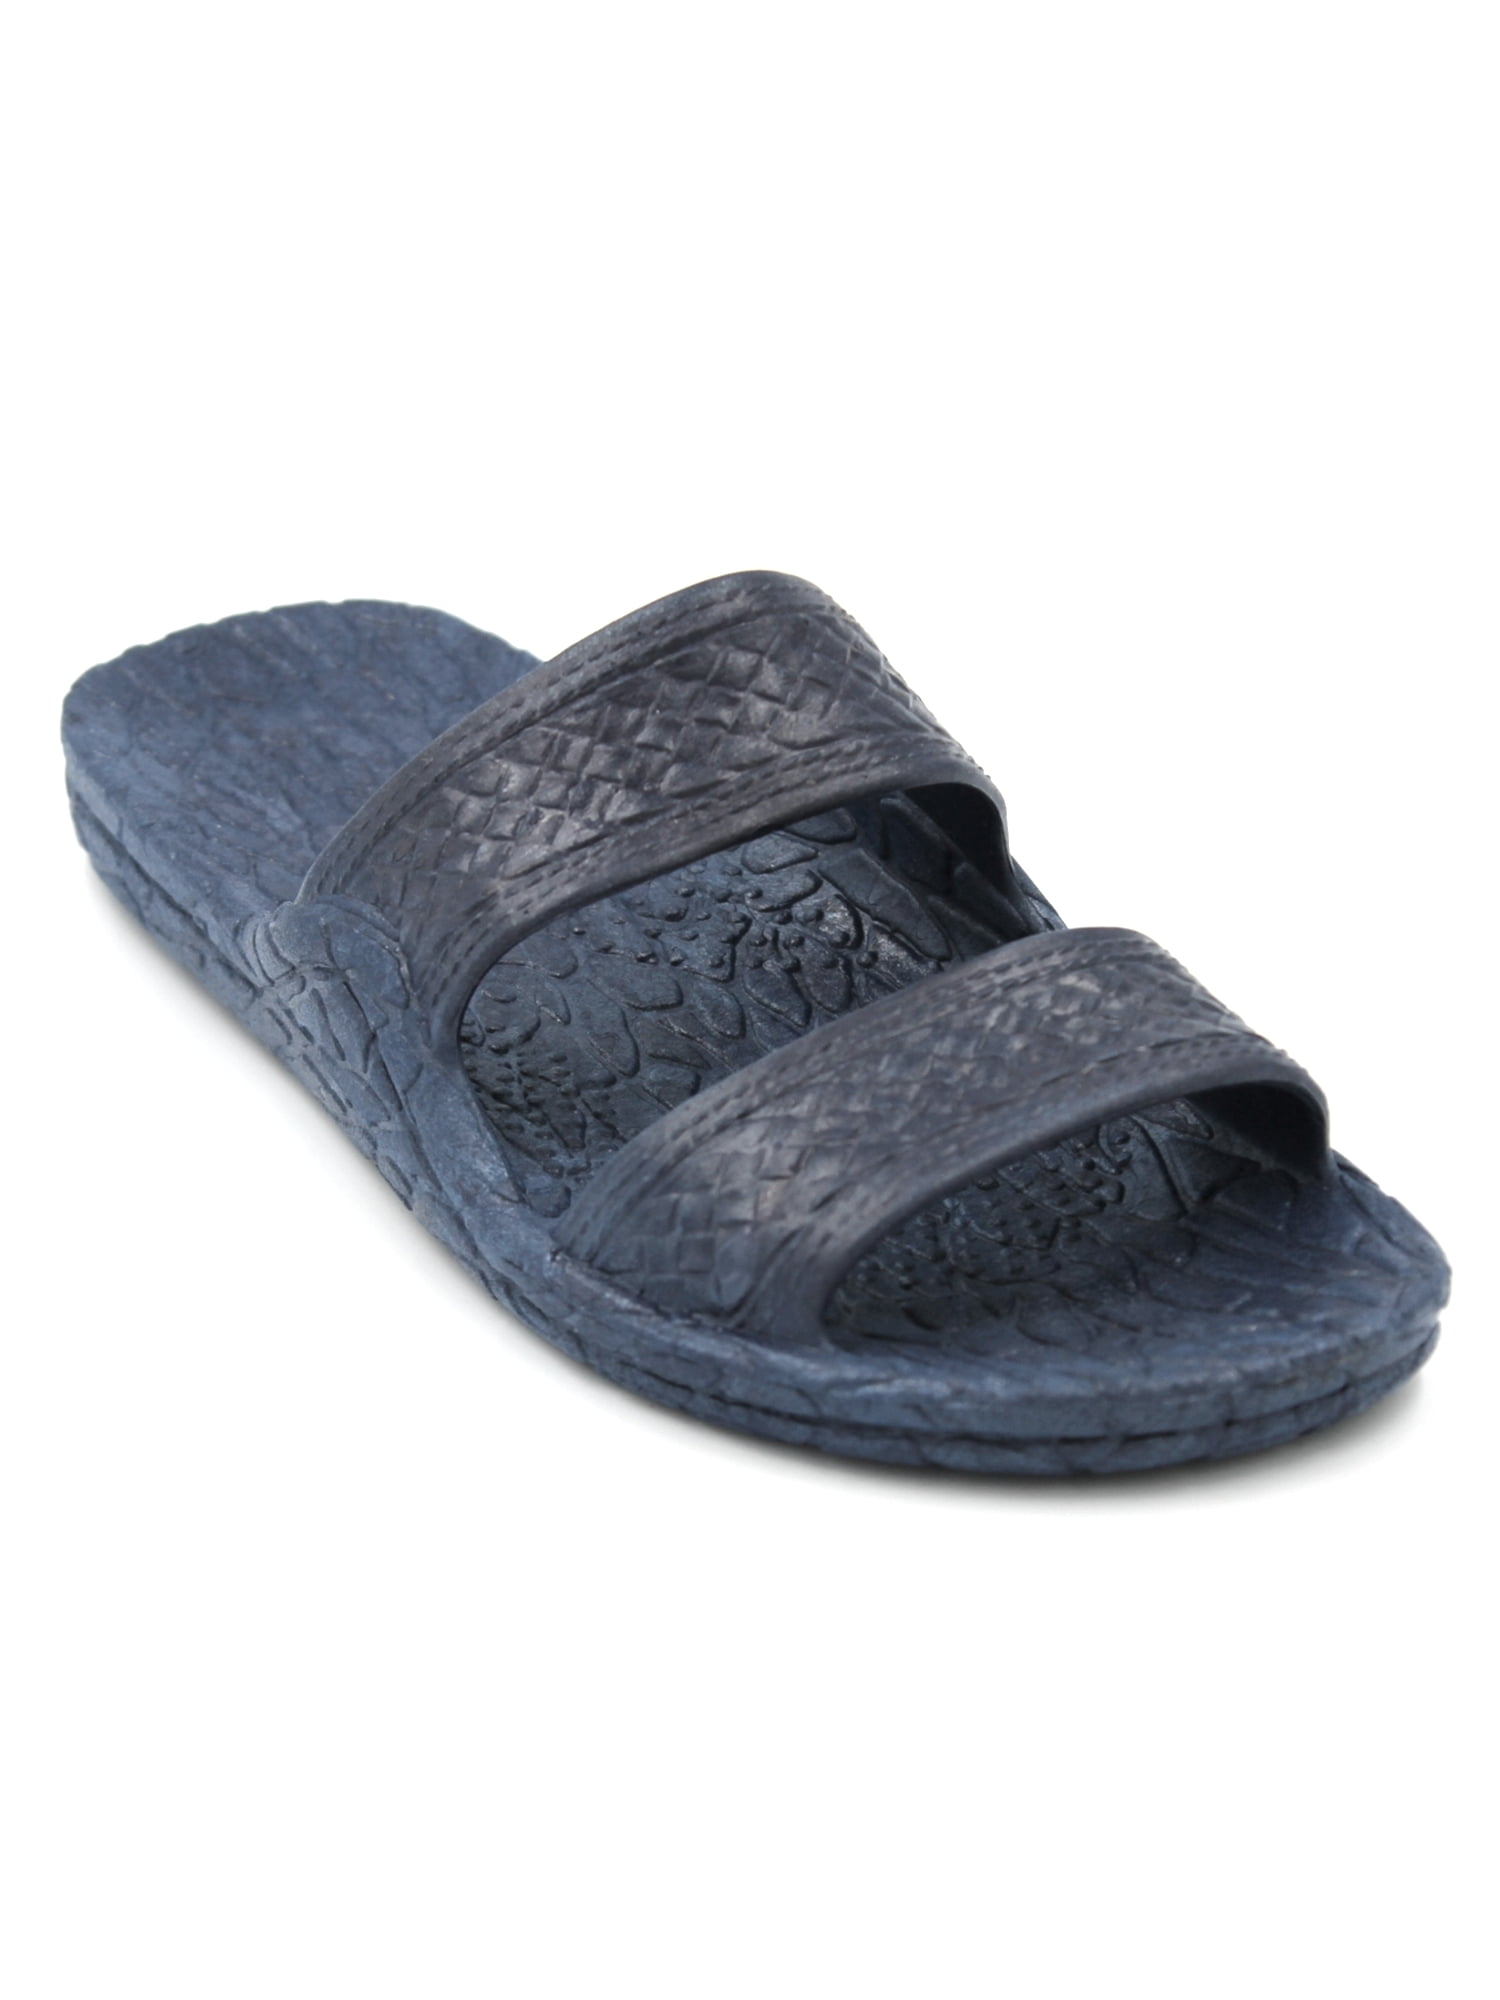 Pali Hawaii Genuine Original Jesus Jandal Sandal (Navy Blue;Size 8 ...